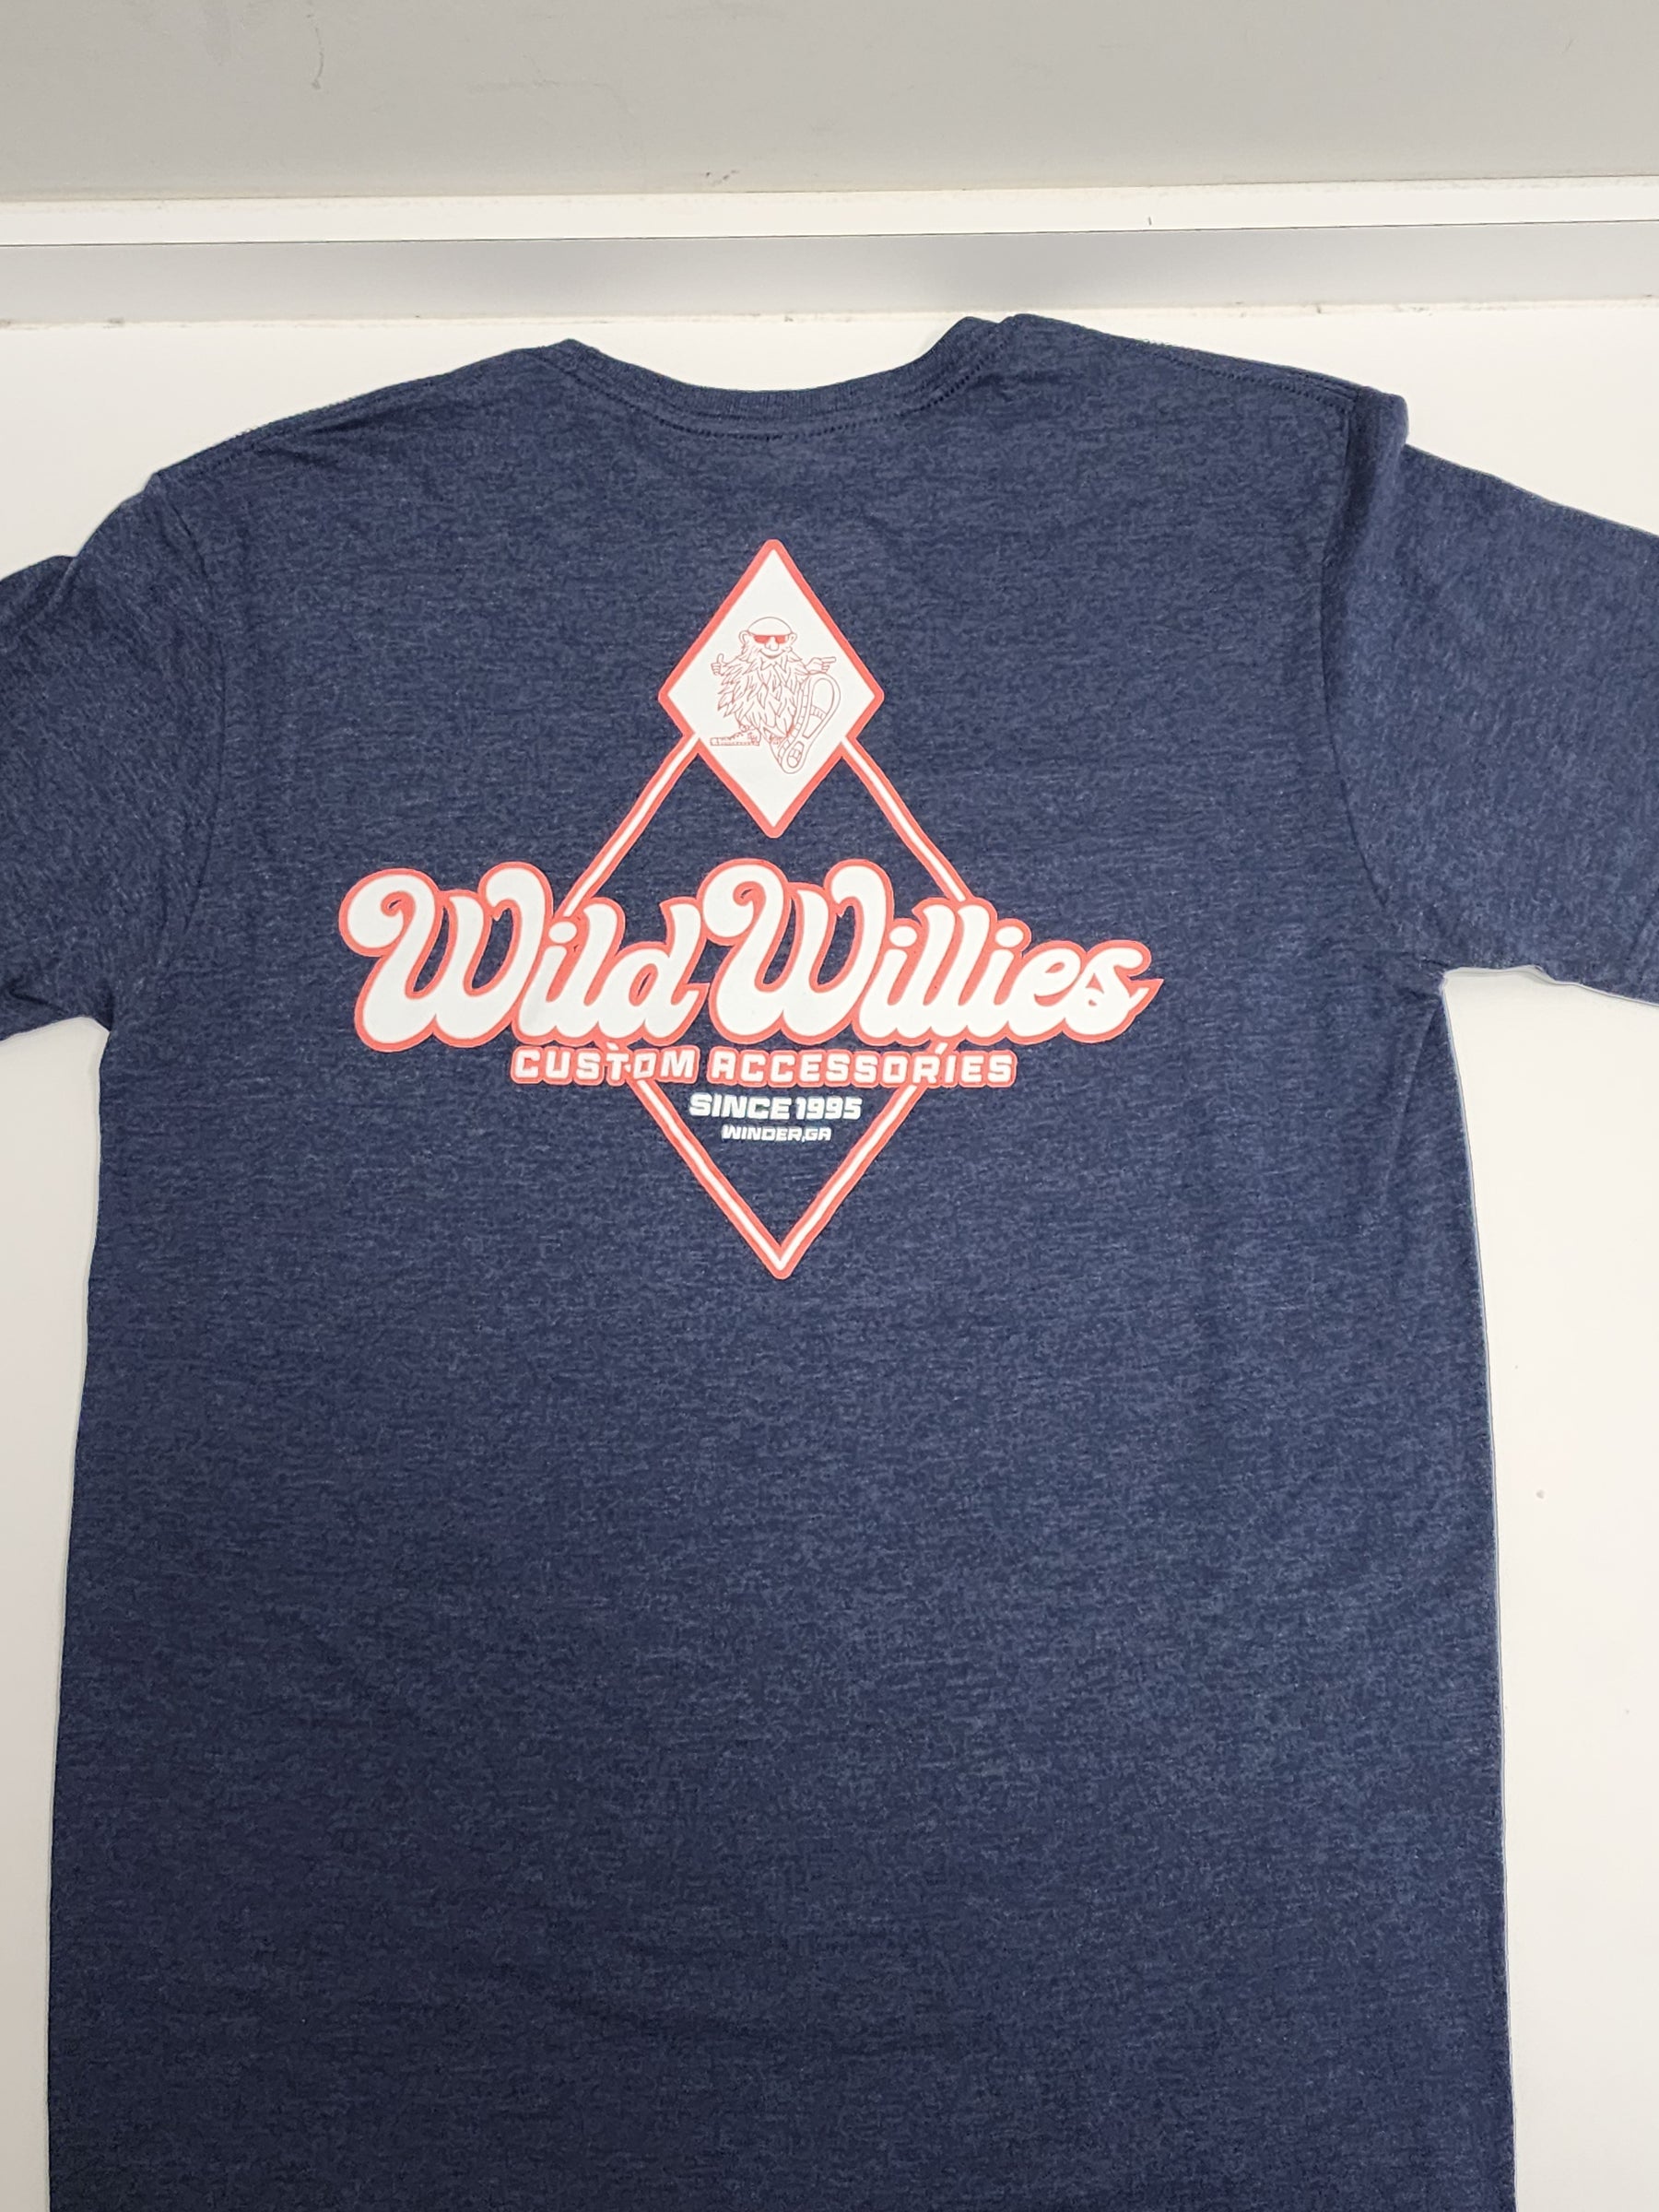 Wild Willies Vintage RC Label